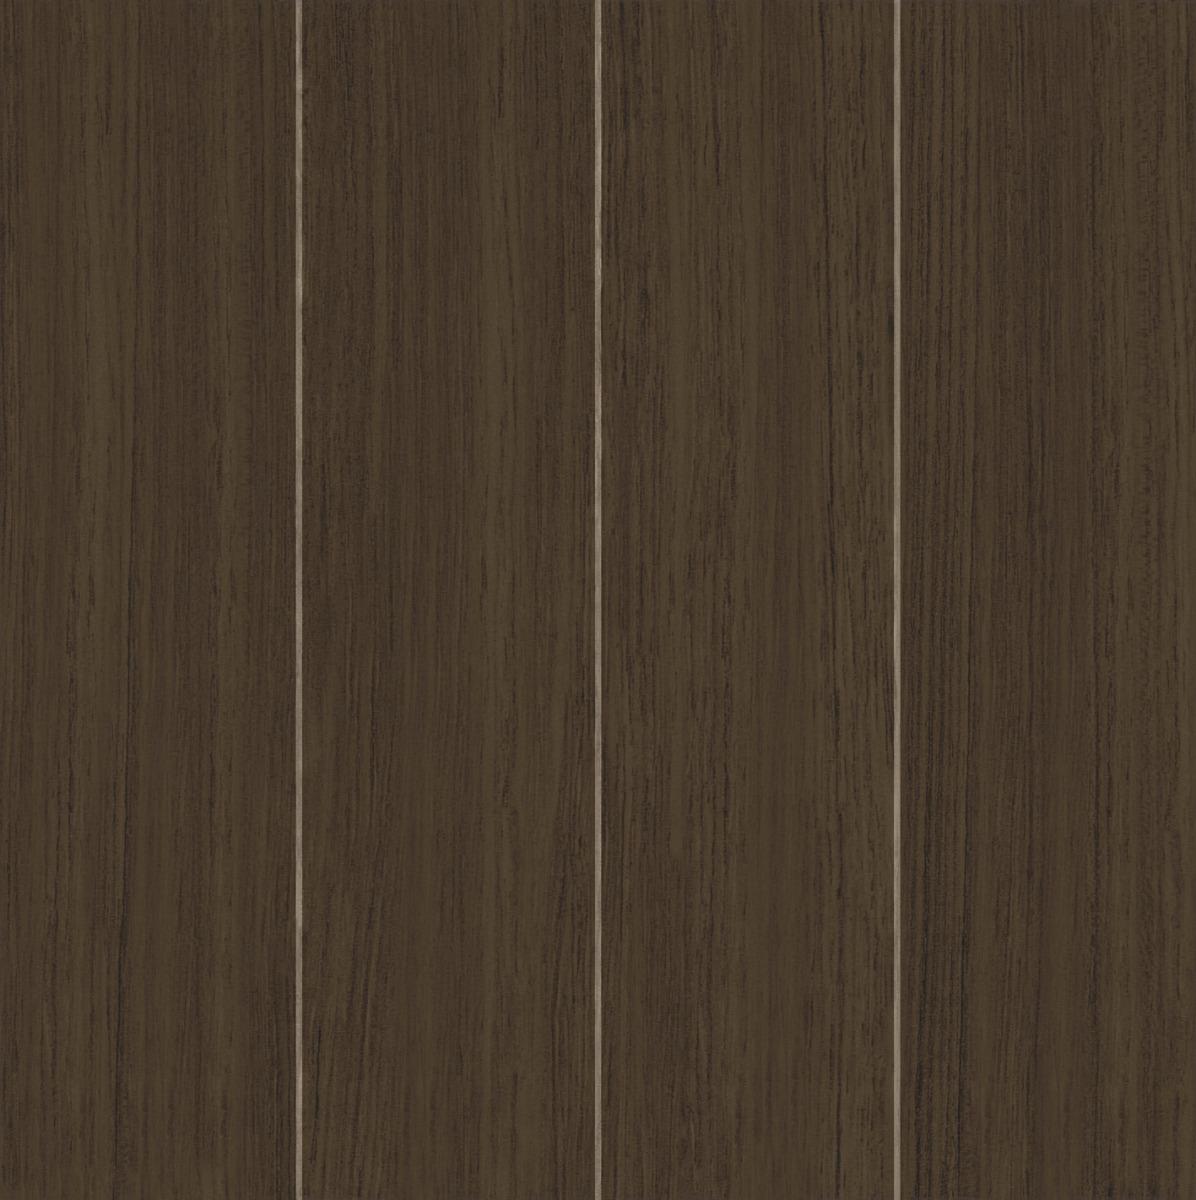 Gft Bdf Espresso Wood Strip Floor Tiles, Espresso Wood Tile Flooring